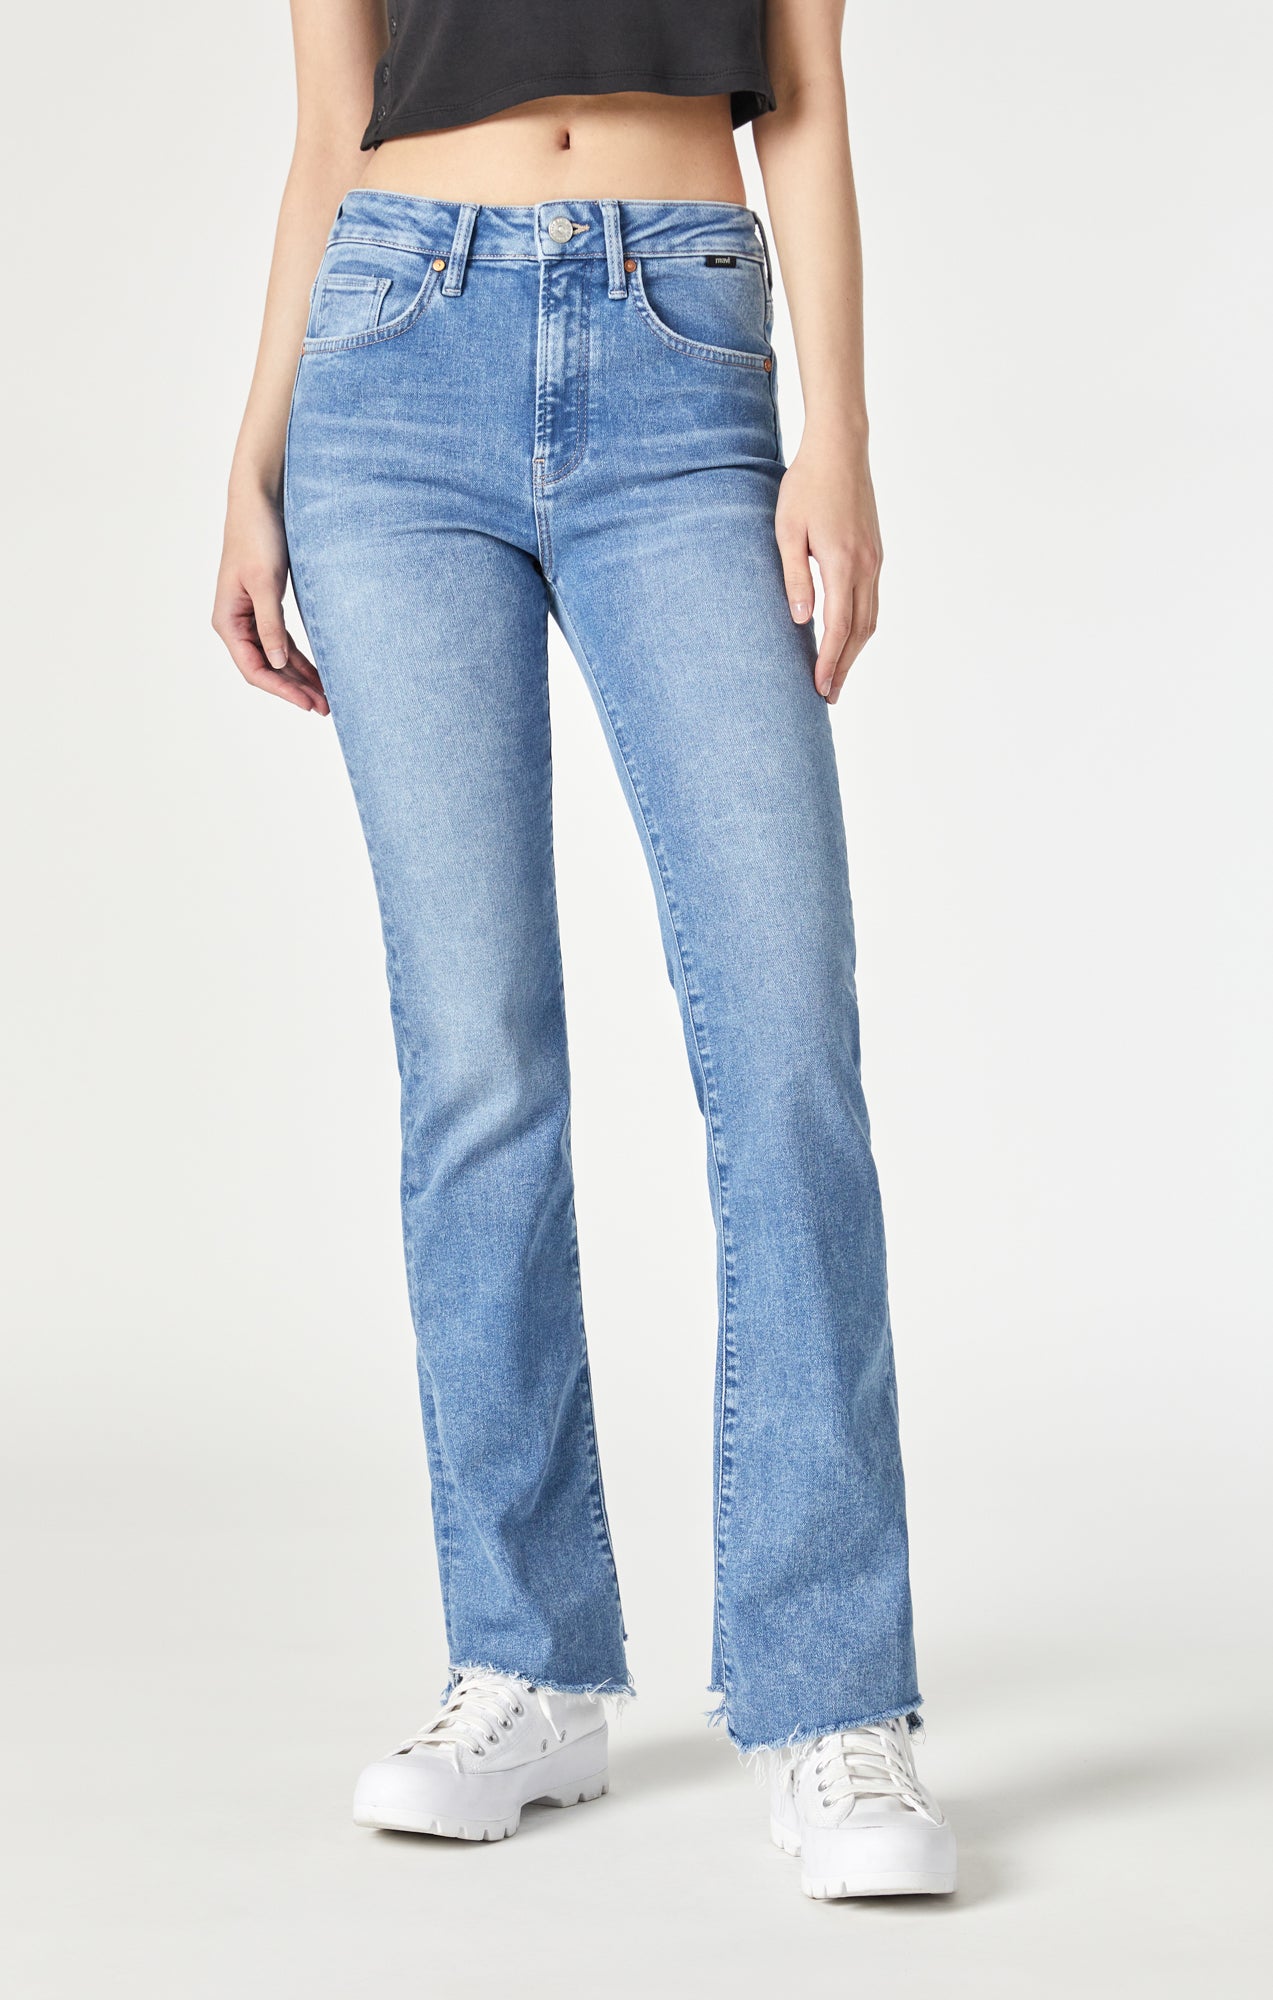 Capreze Women Buttoned Bootcut Jeans Casual Flare Denim Pants Bell Bottom  Jeans with Pockets Light Blue XS